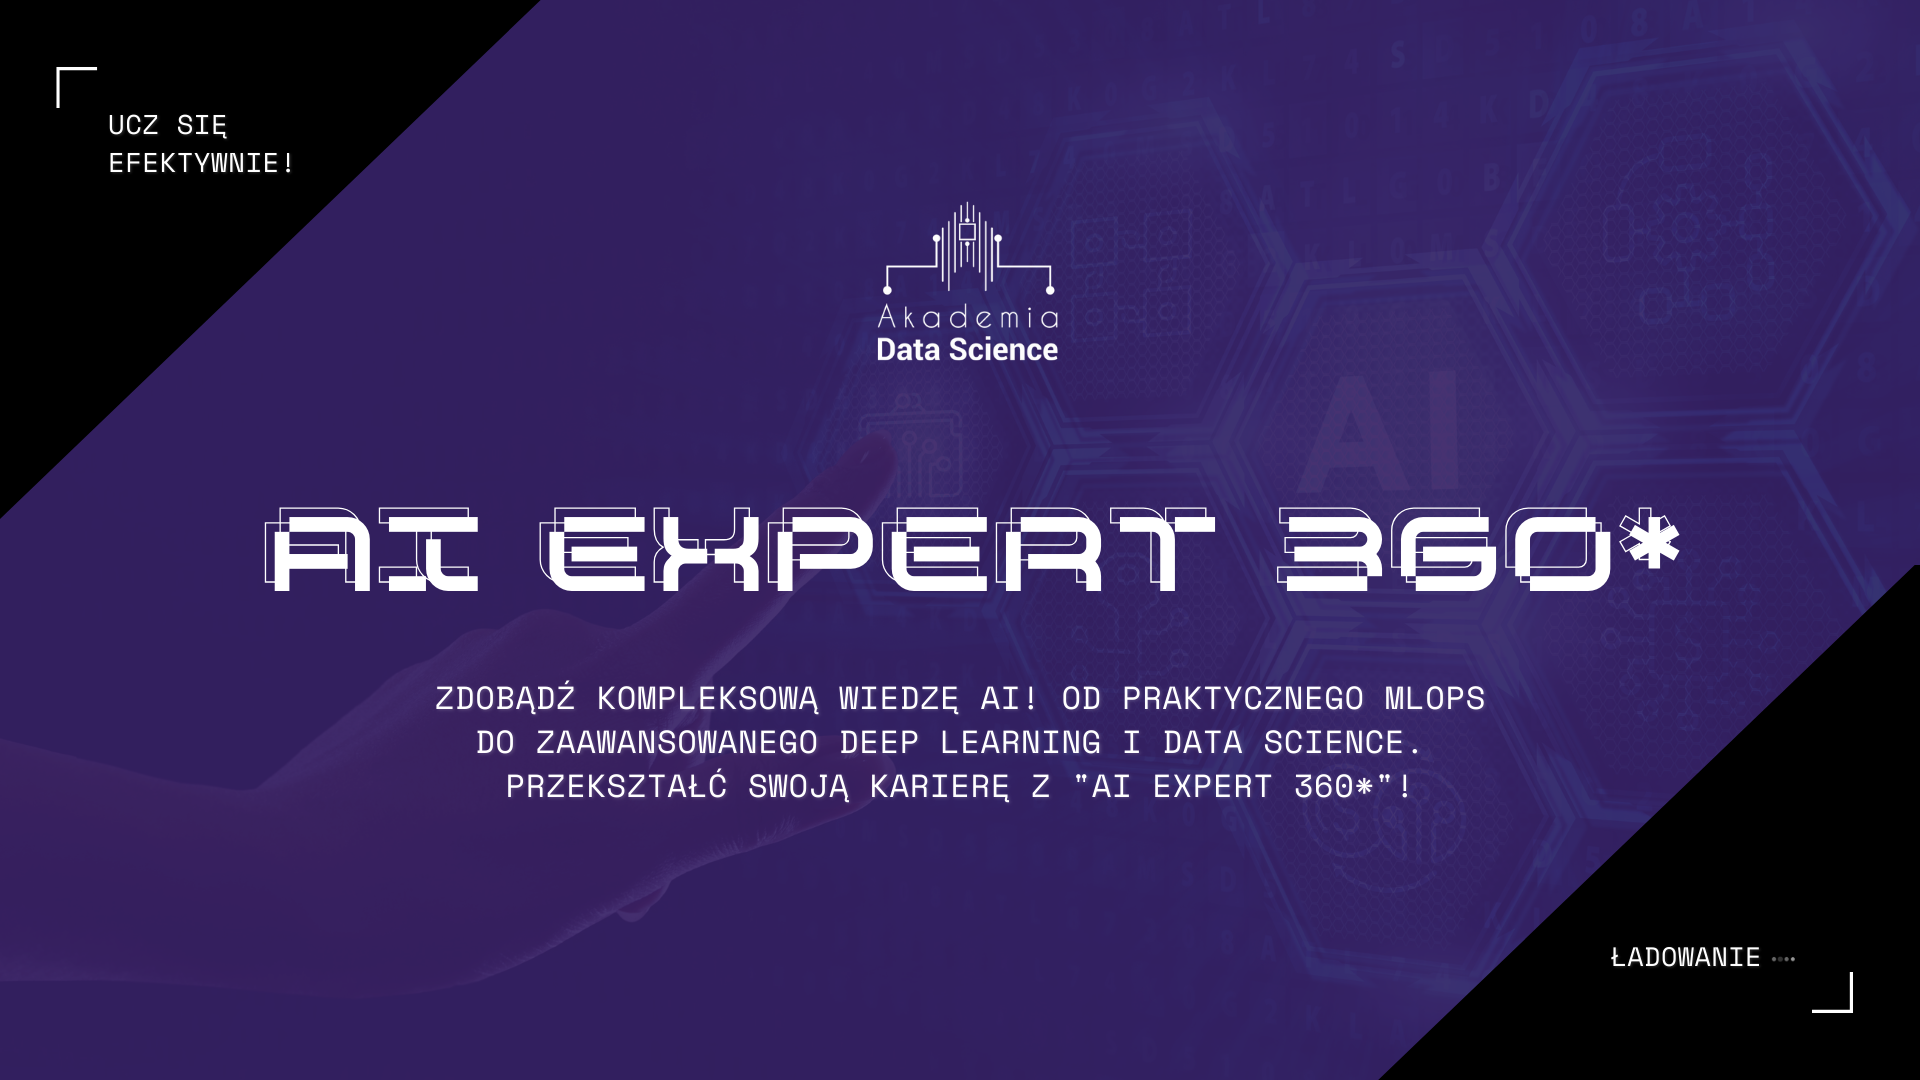 AI Expert 360*